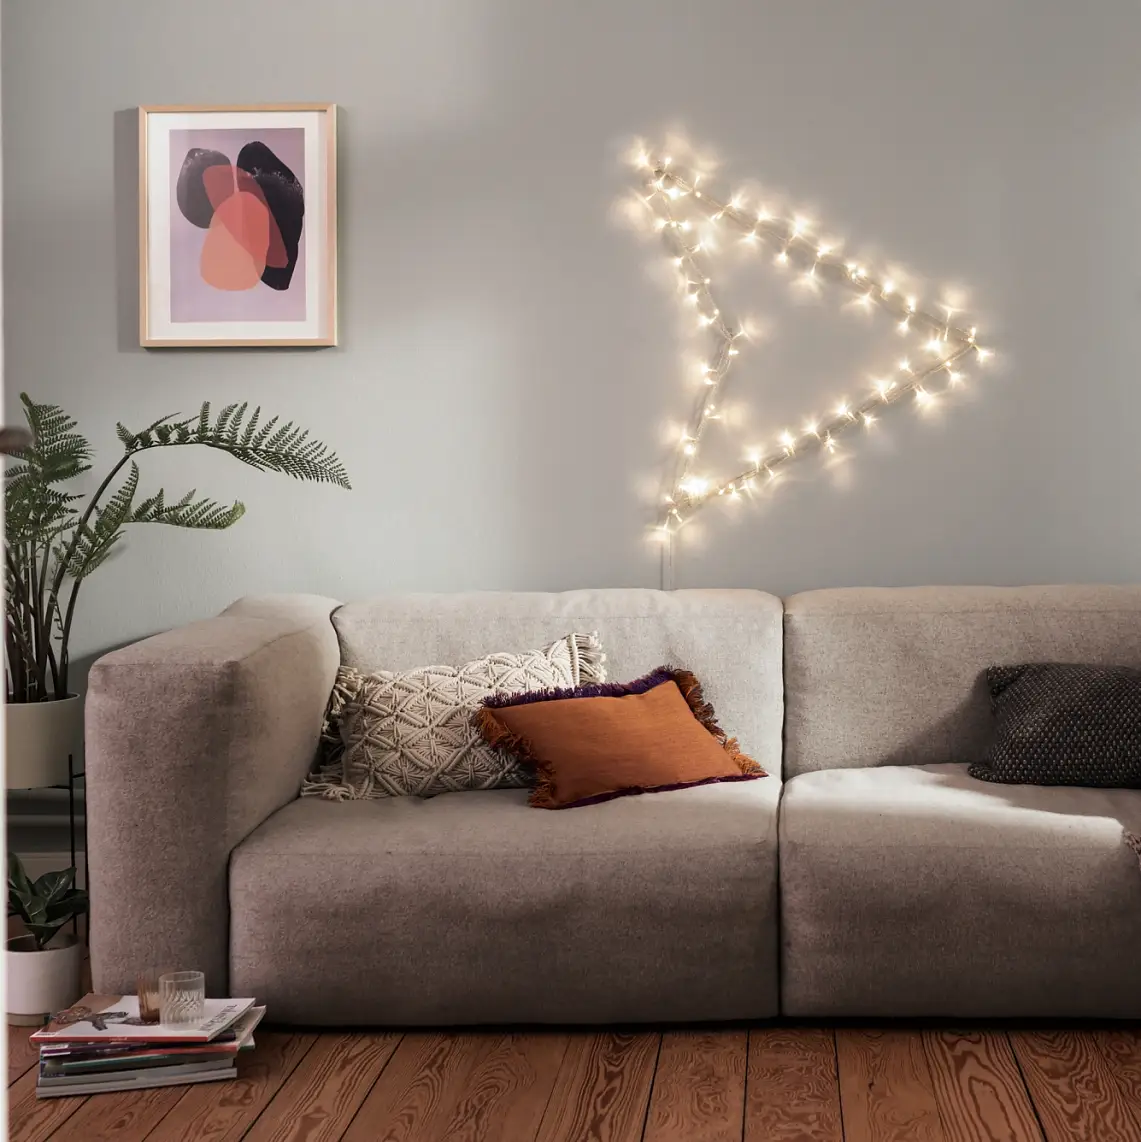 Beleuchtungsideen – Teaser: Graues Sofa in der Mitte, darüber ein beleuchteter Pfeil an der Wand.